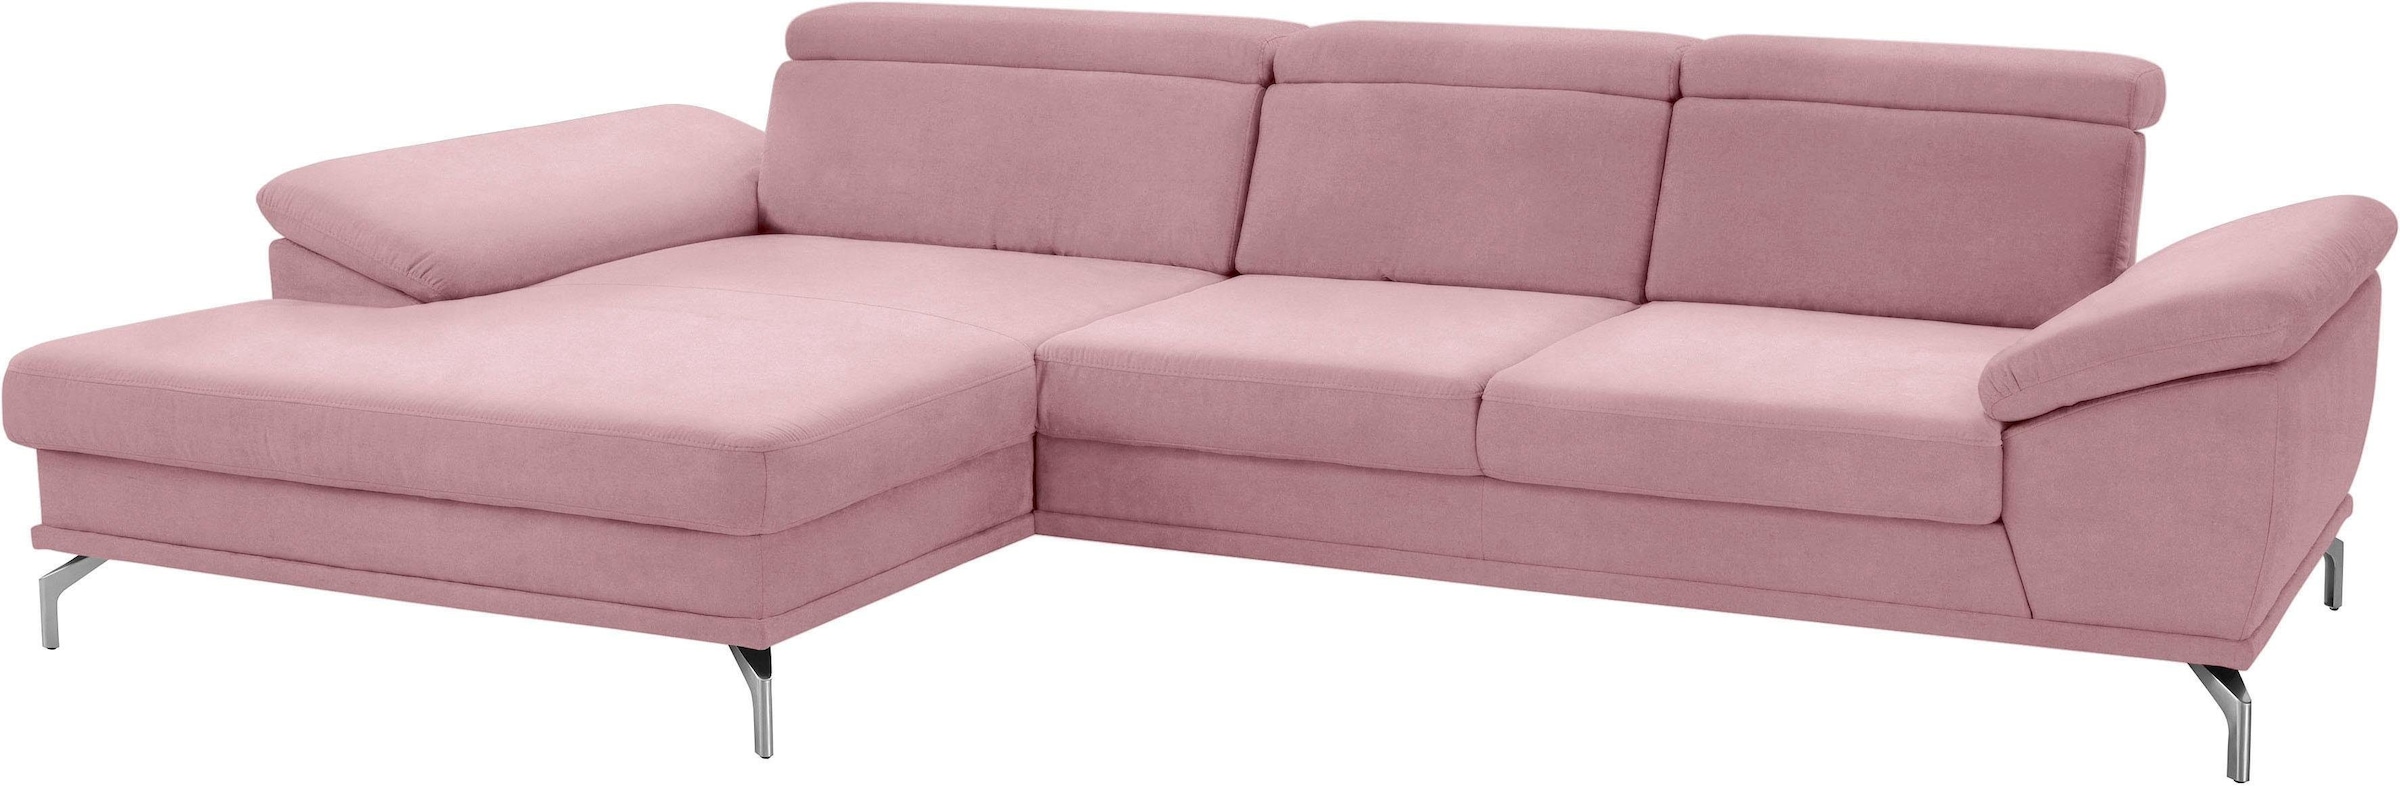 Rosa Sofa bequem bestellen | Longchairs